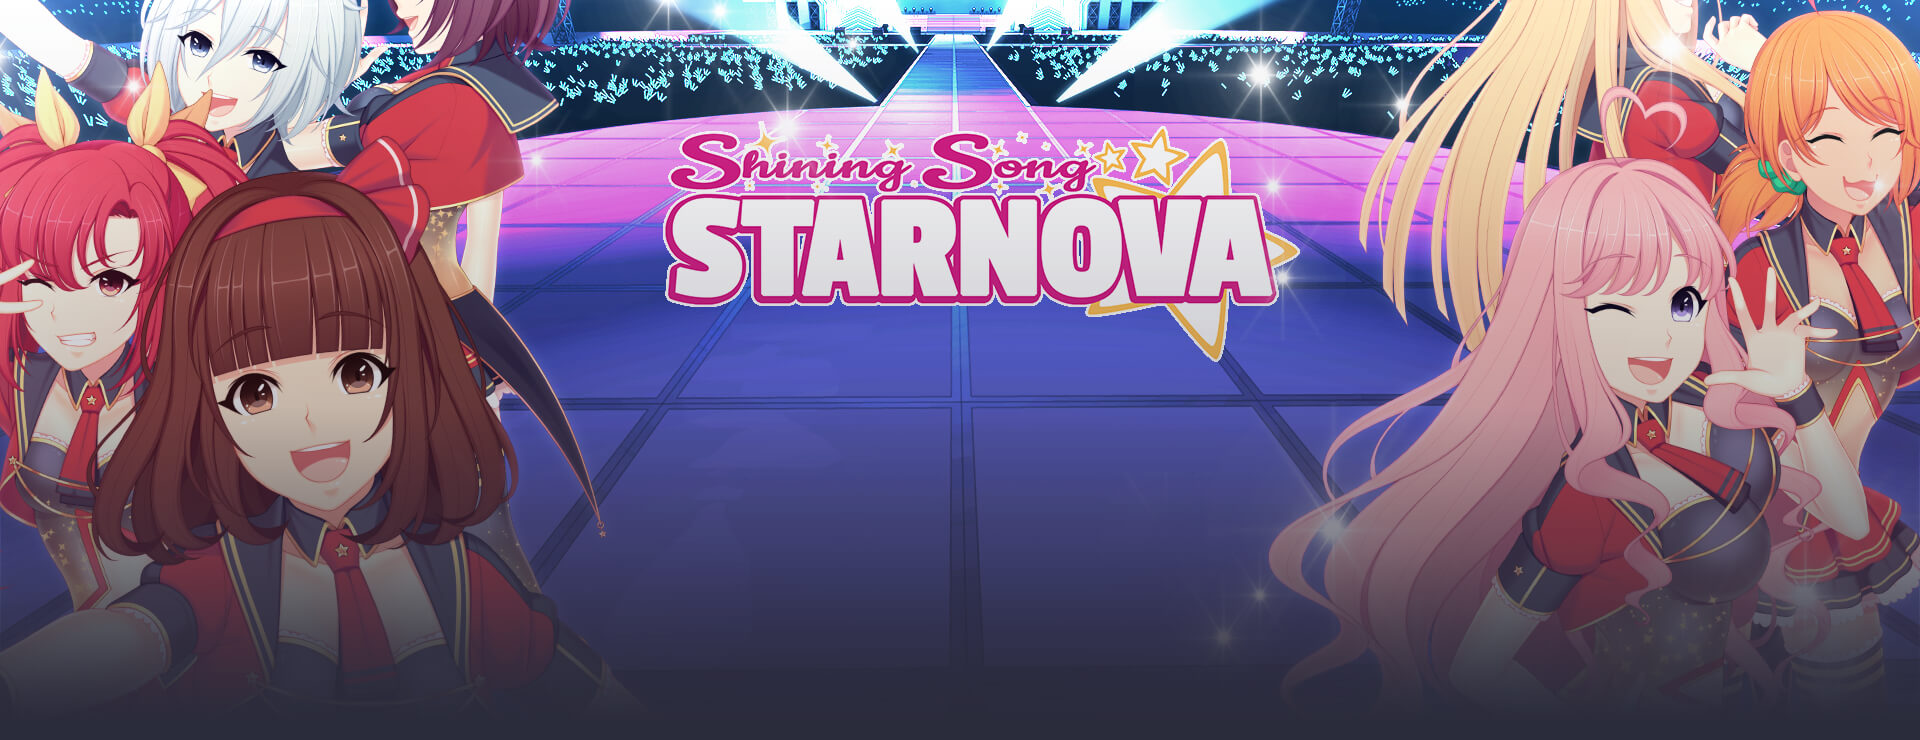 Shining Song Starnova - Roman Visuel Jeu